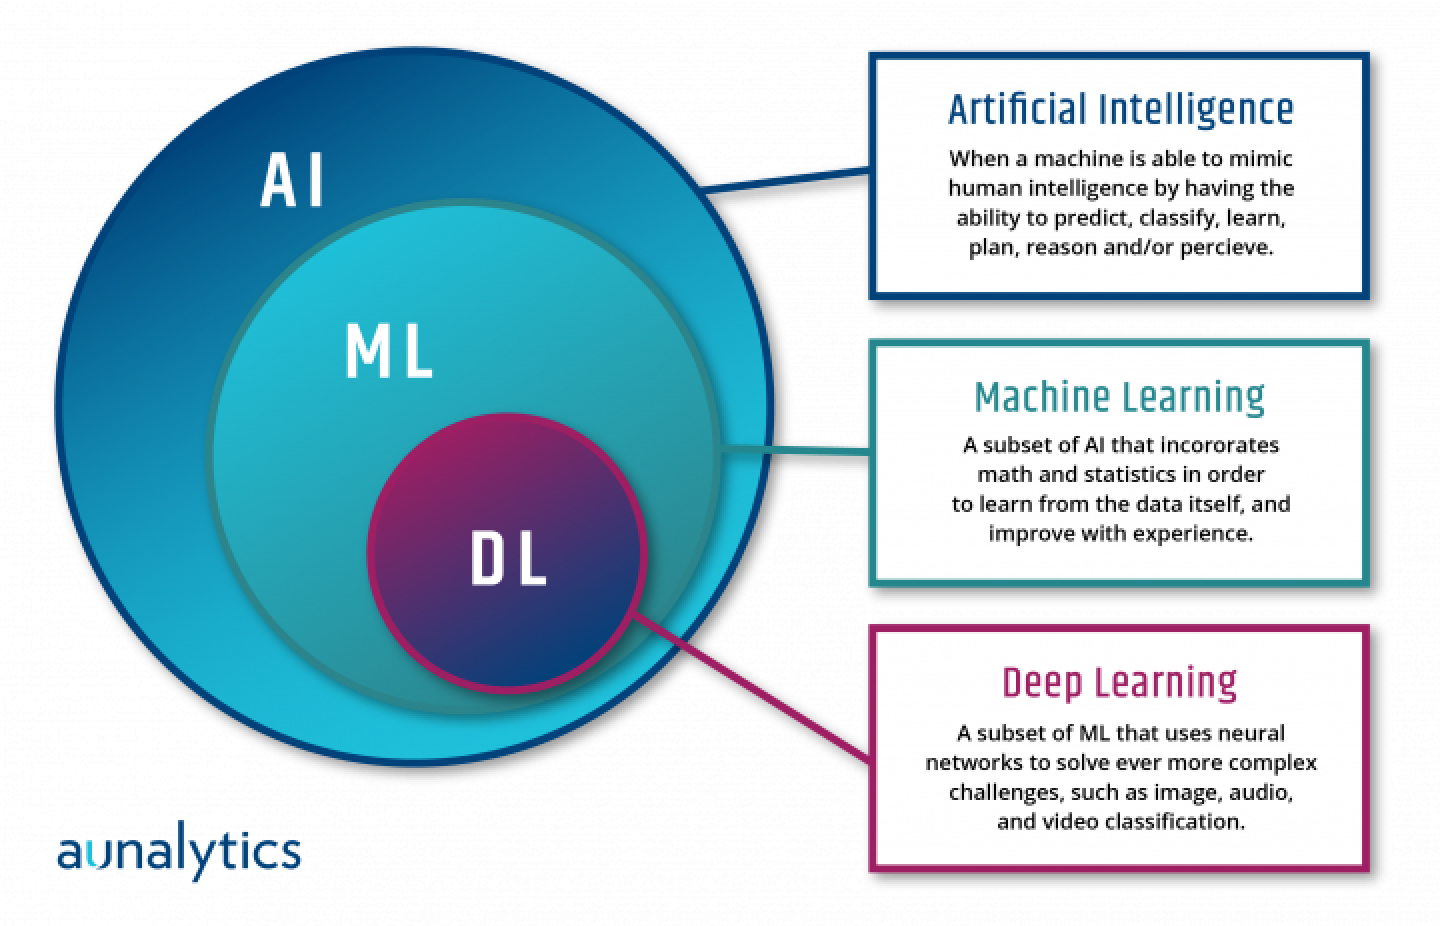 AI deep learning video analysis